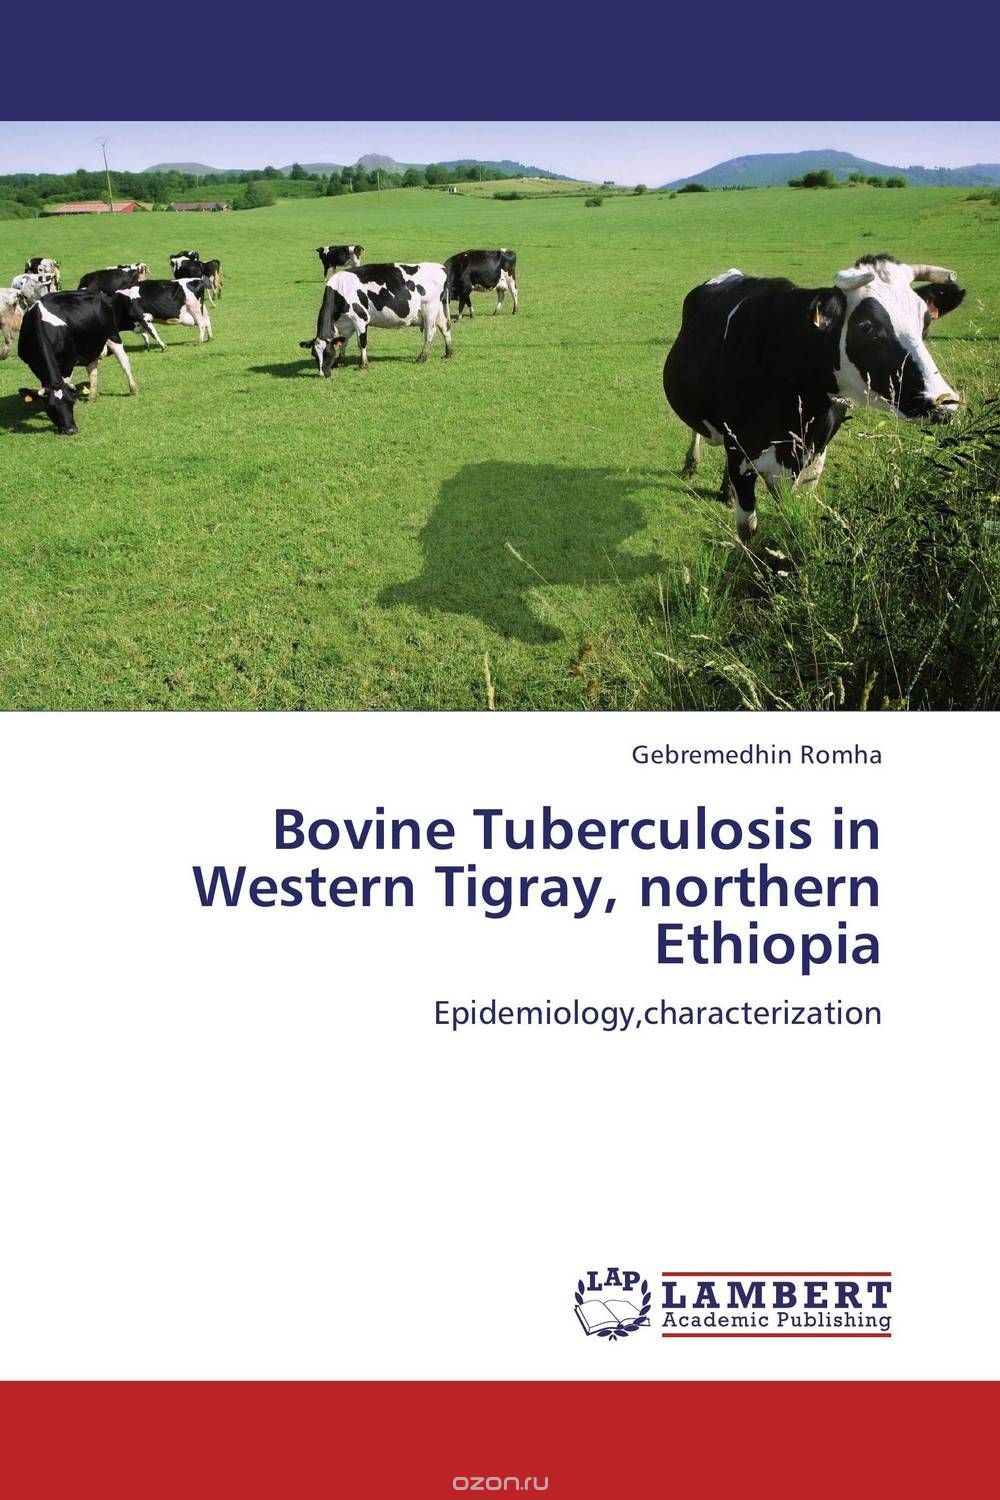 Скачать книгу "Bovine Tuberculosis in Western Tigray, northern Ethiopia"